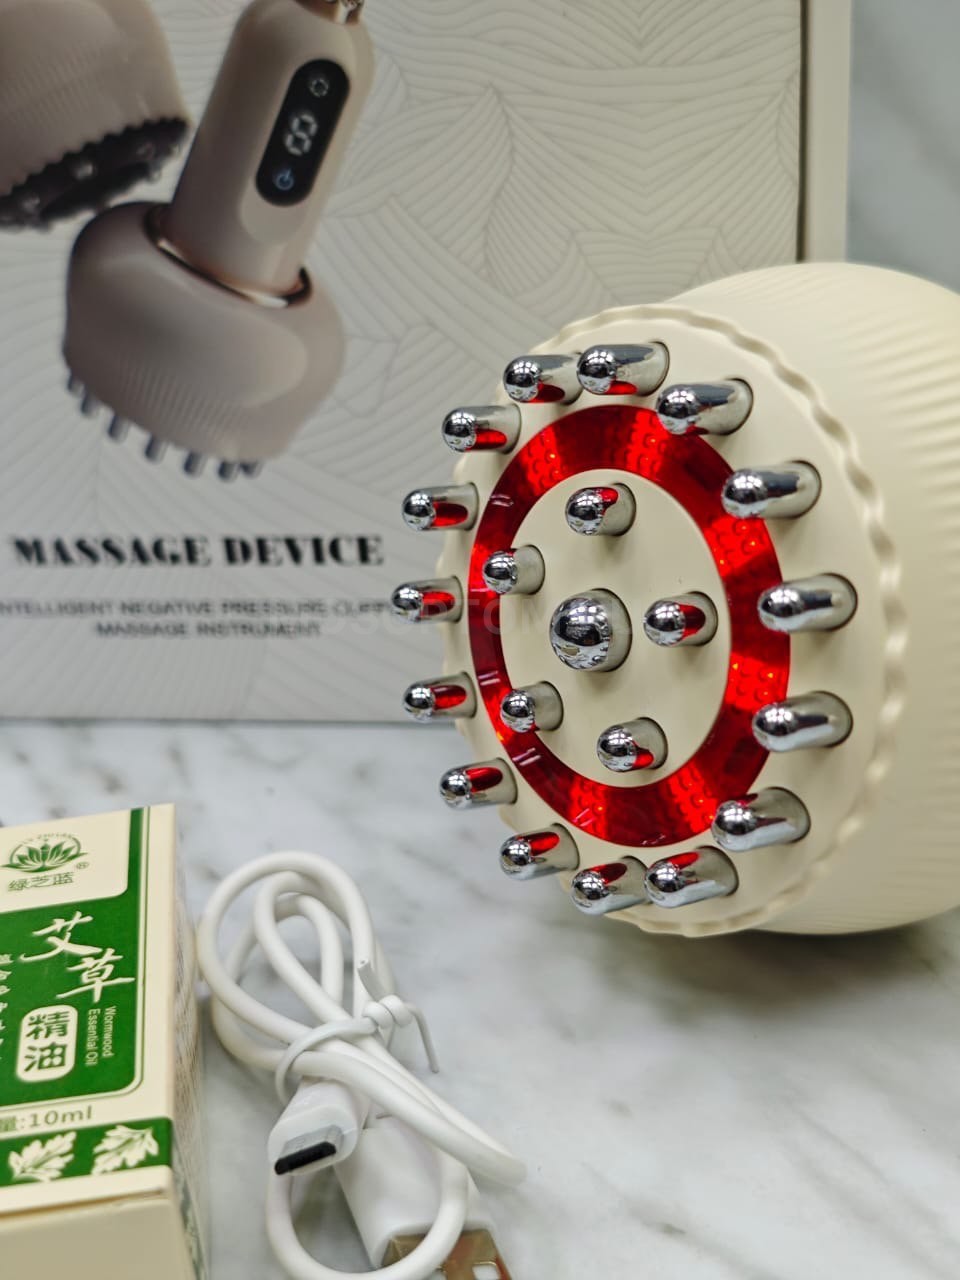 Вакуумный массажер для тела Massage Device Intelligent Negative Pressure Cupping Massage Instrument G05-B оптом - Фото №5